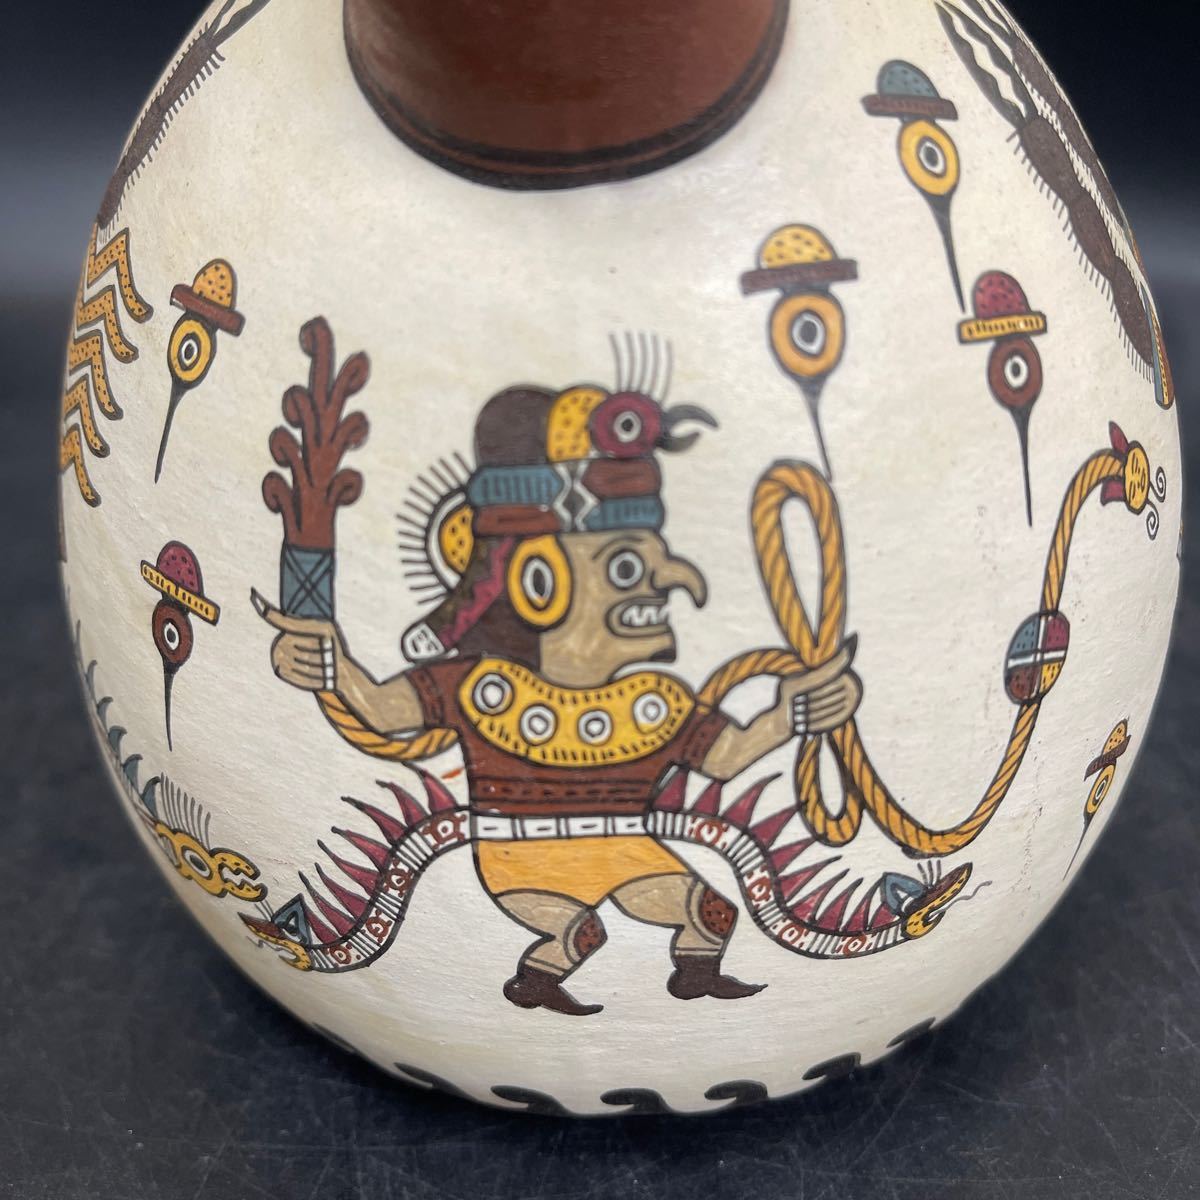 B12211706 ペルー モチェ文化土器 鐙型注口土器 インテリア チャビン文化様式から続く鐙形注口を持つ細くすっきりした印象の平底球形の土器_画像6